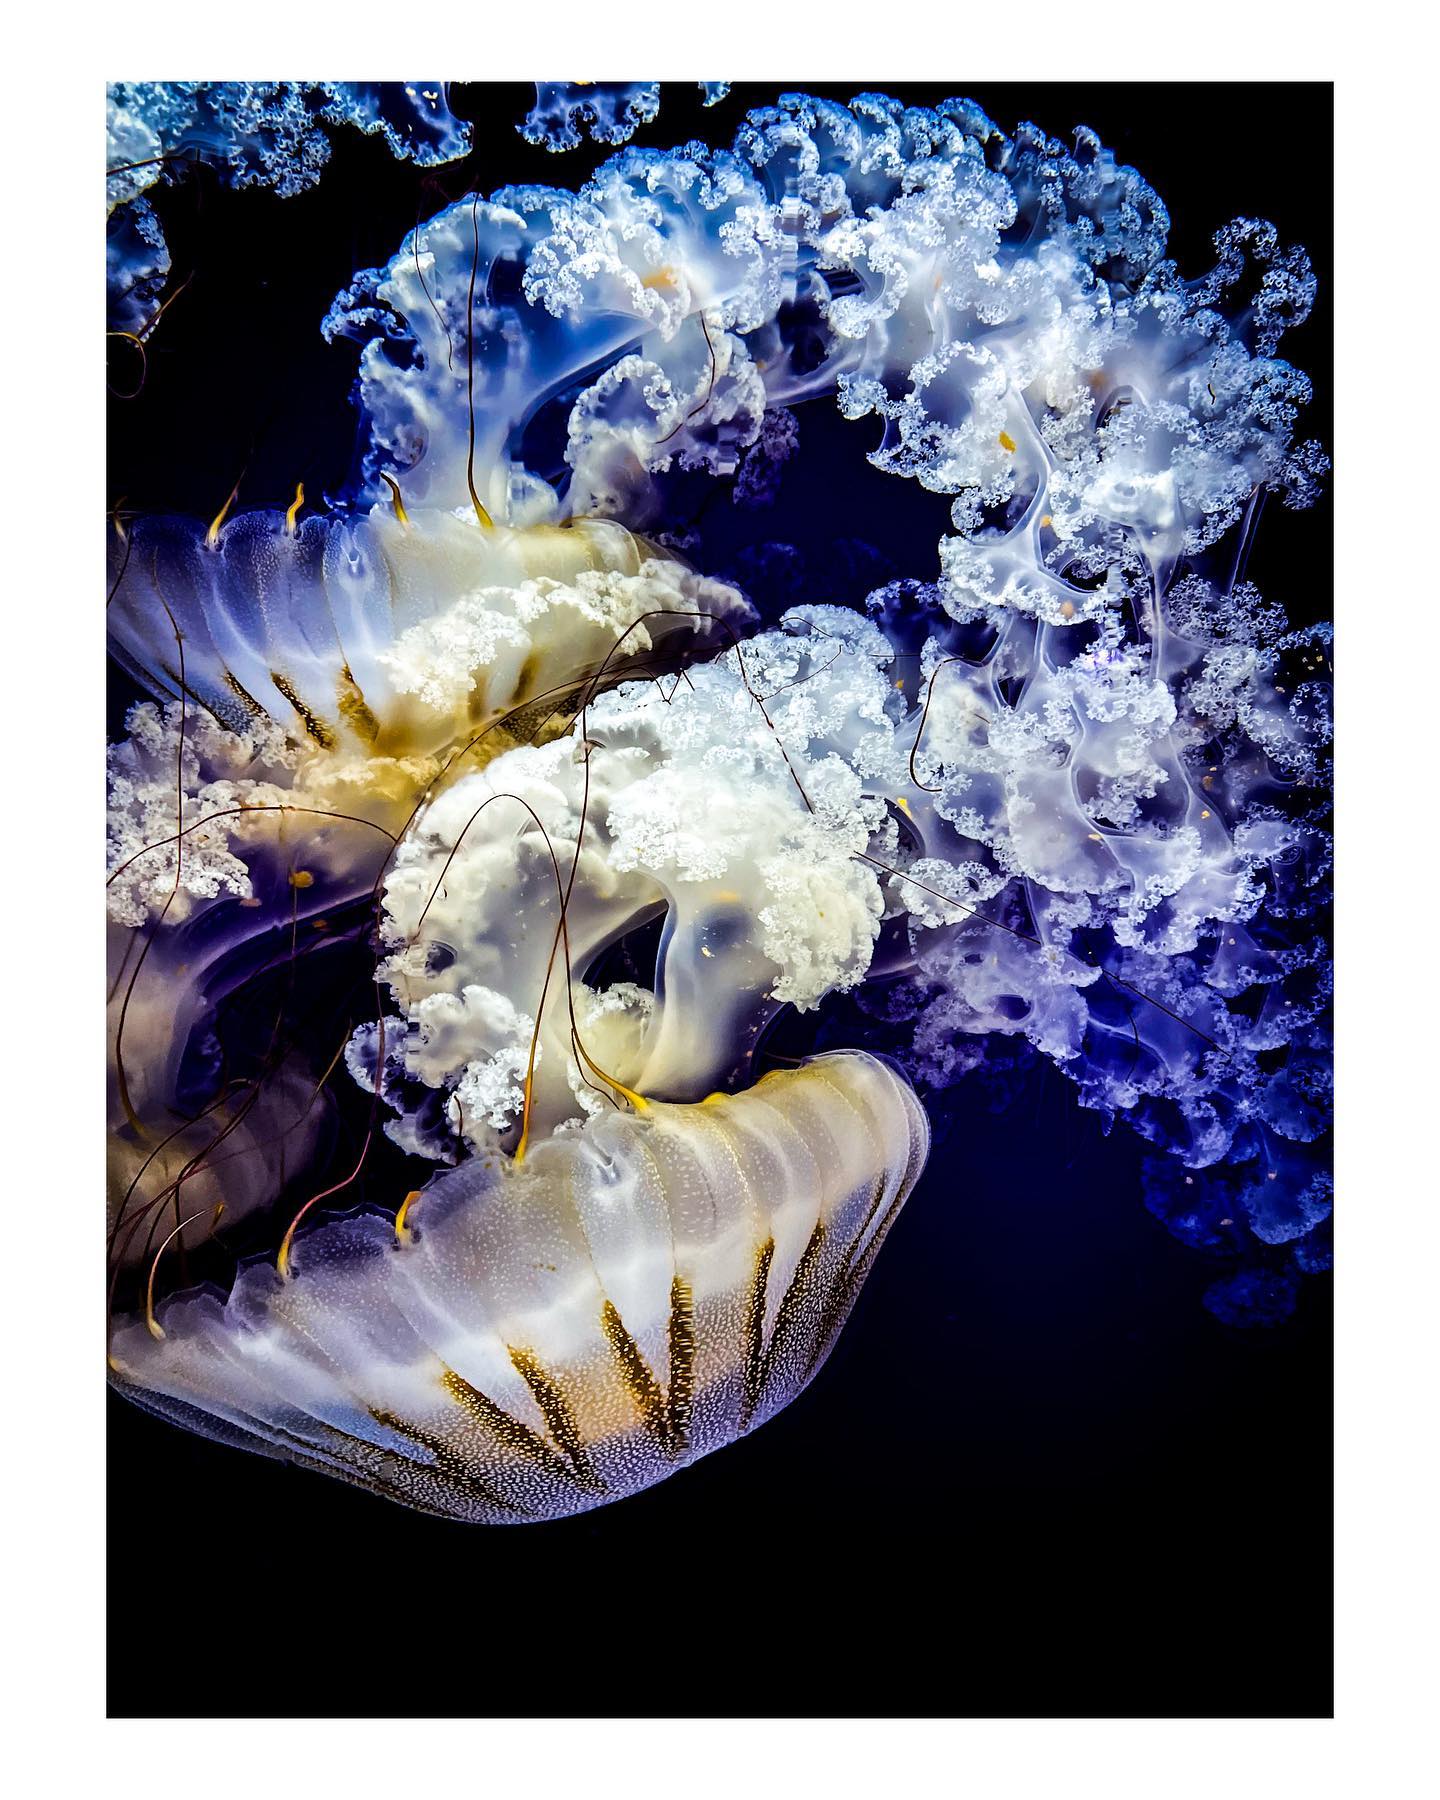 Jellyfish:
1️⃣, 2️⃣ or 3️⃣?

#jellyfish 
#hrvatska 
#croatia 
#pula 
#blue